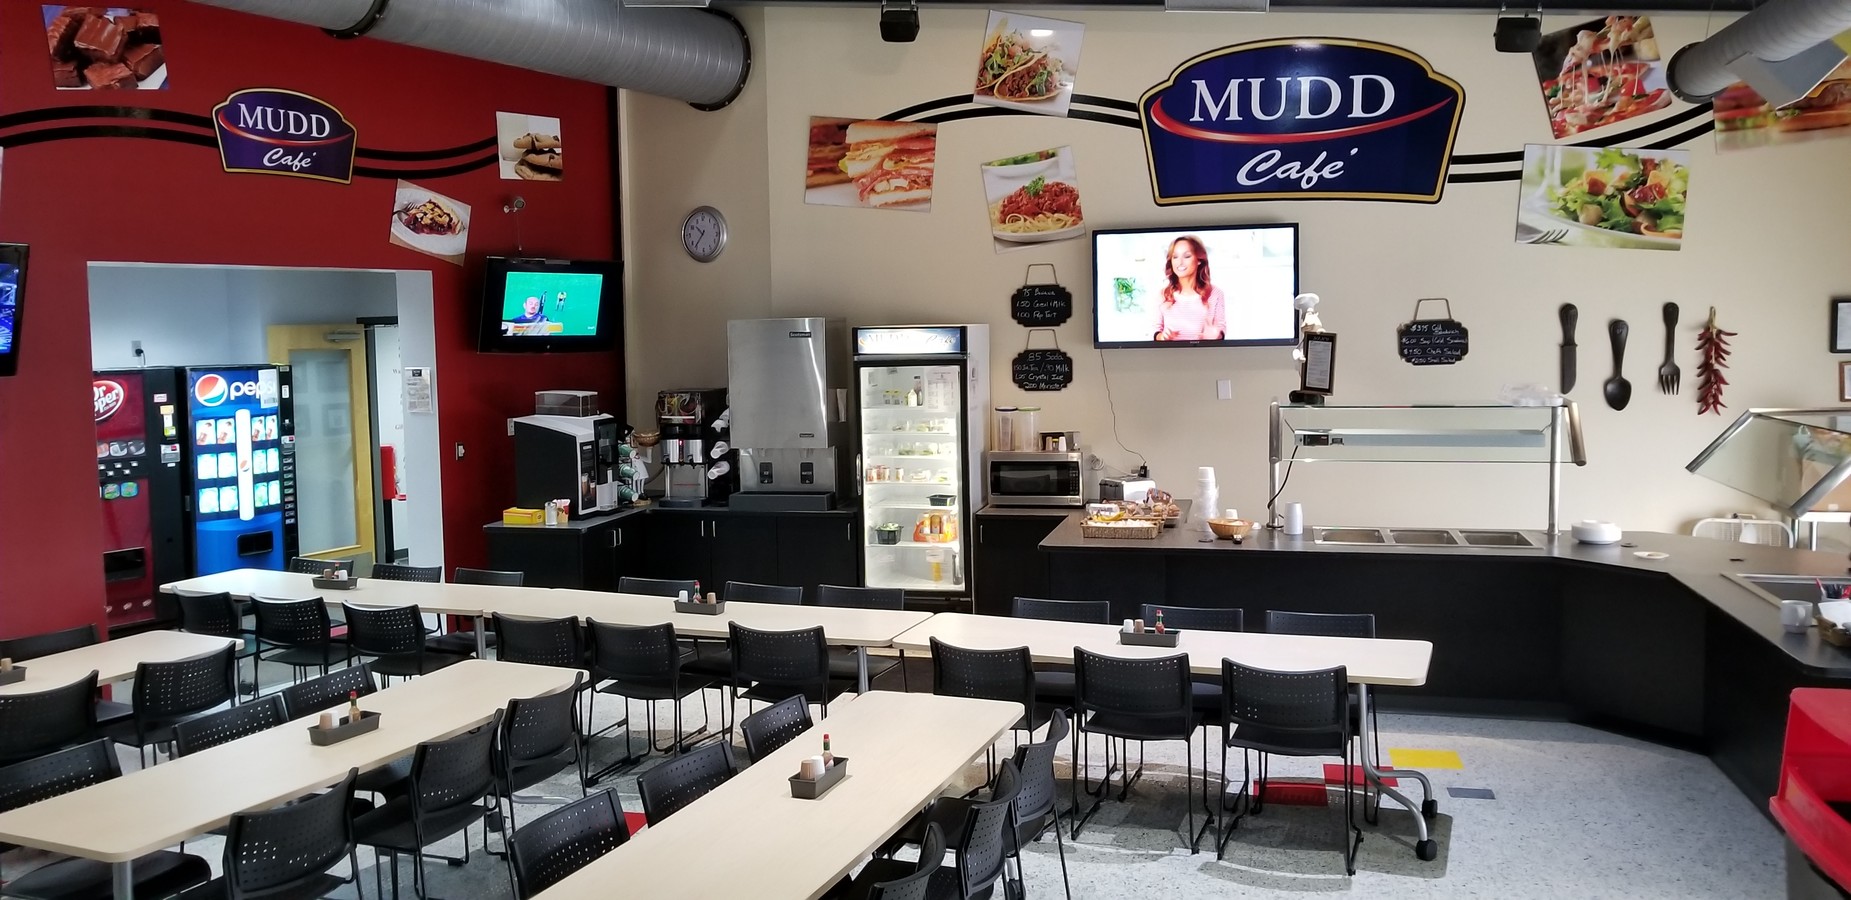 Mudd Cafe